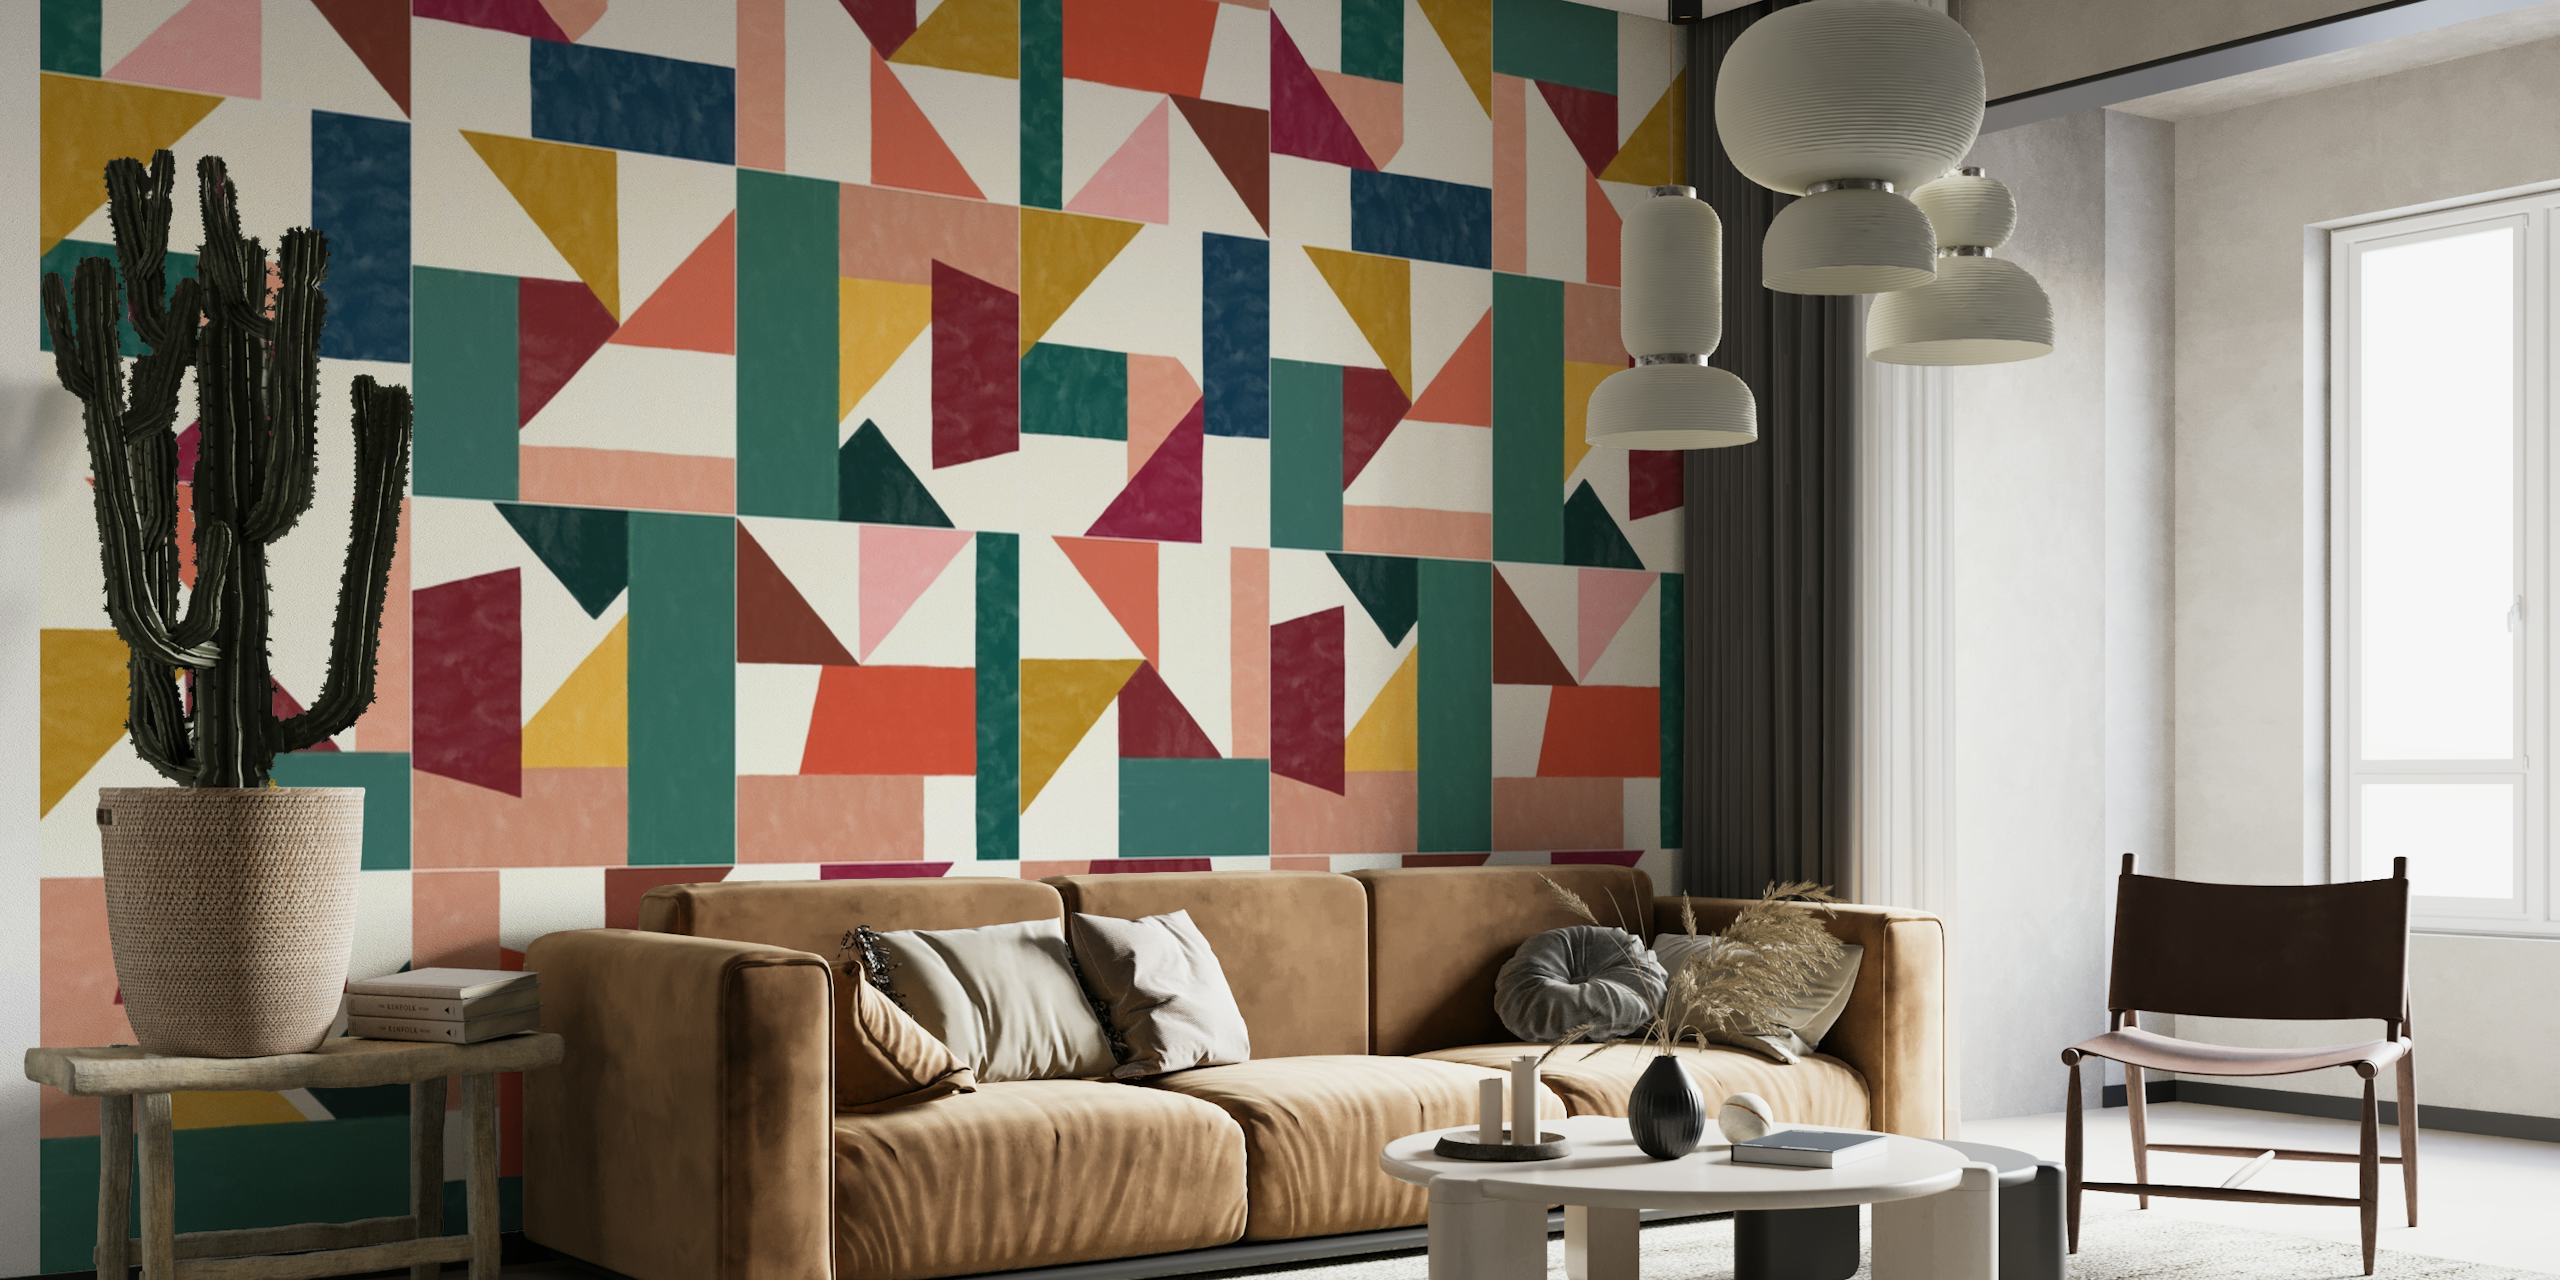 Tangram Wall Tiles One wallpaper